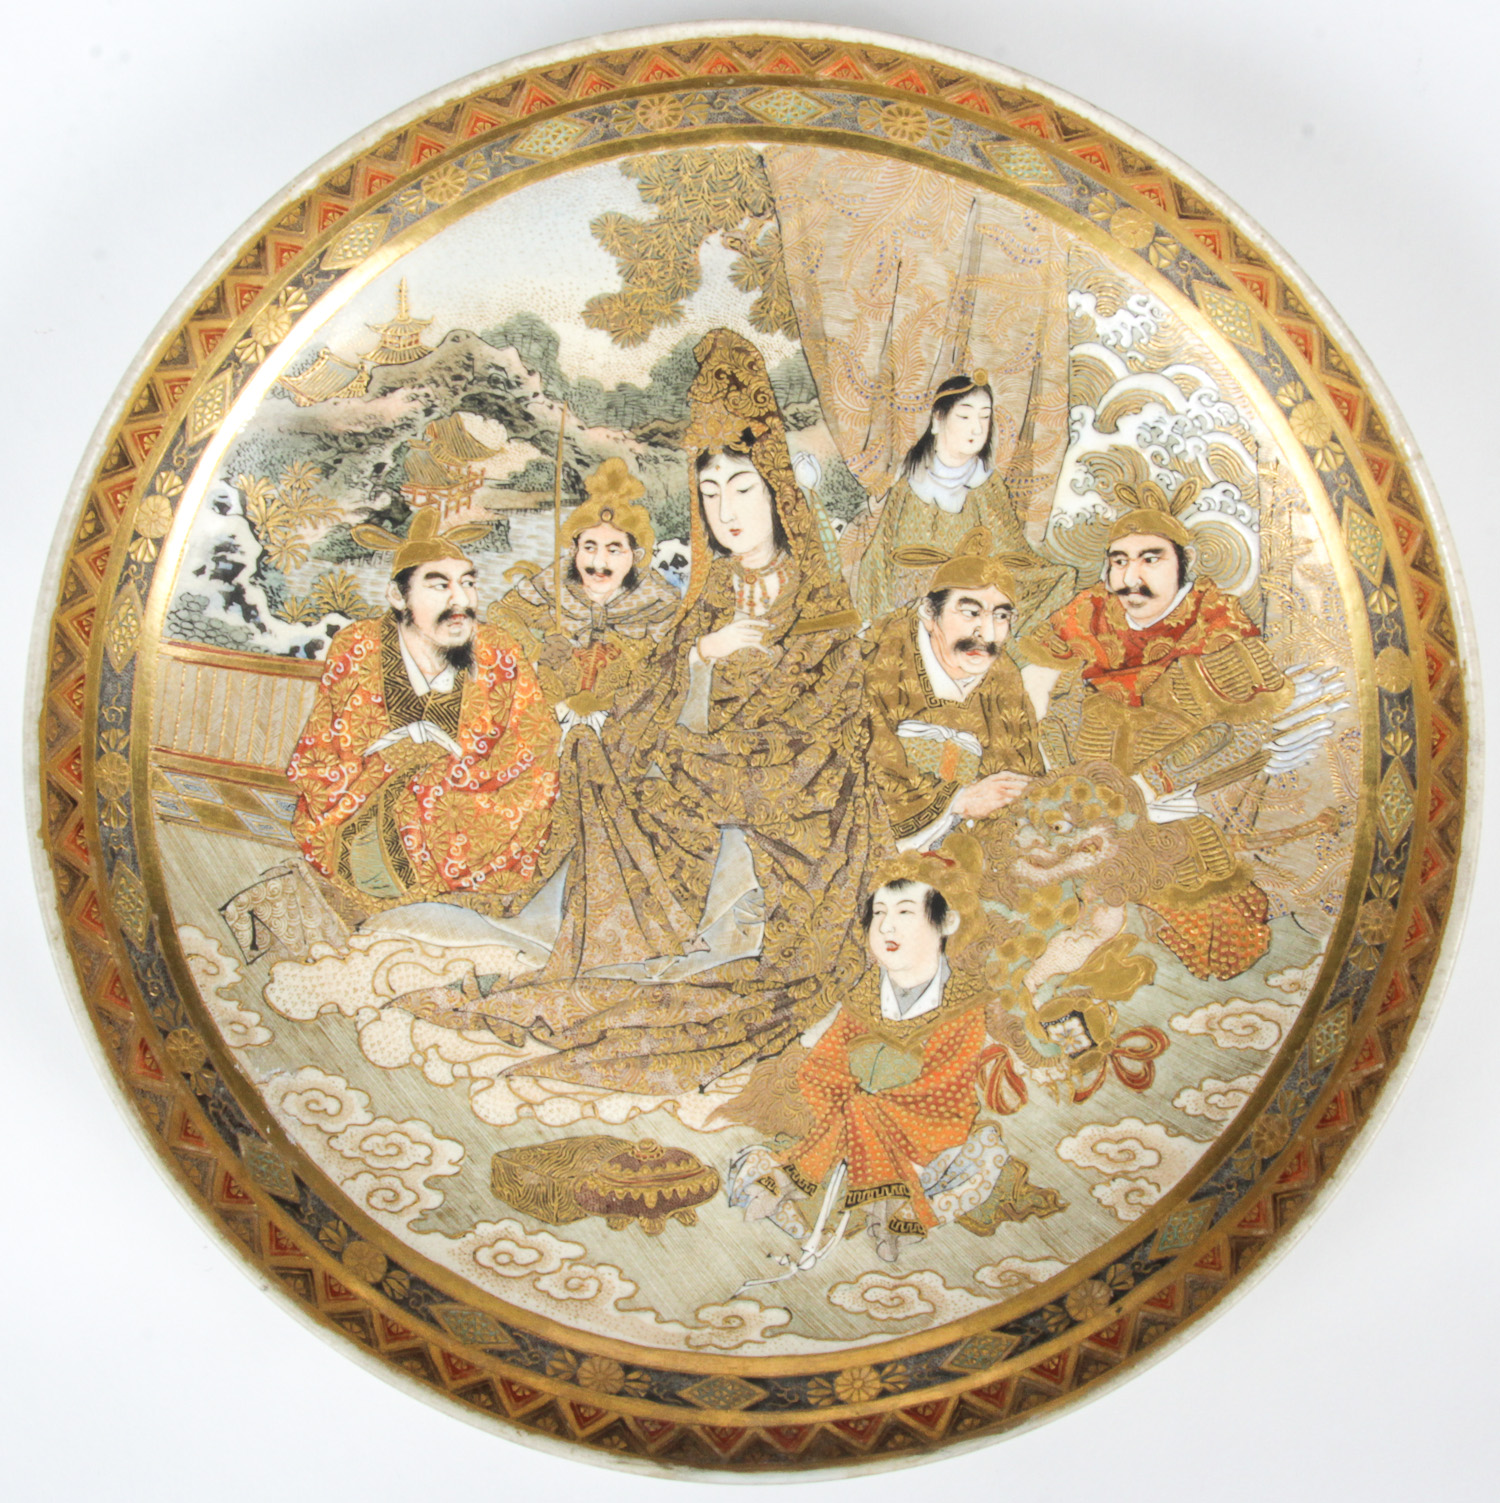 2 Antique Japanese Satsuma and Seto Items: A fine 19th century satsuma earthenware plate depicting - Image 2 of 6